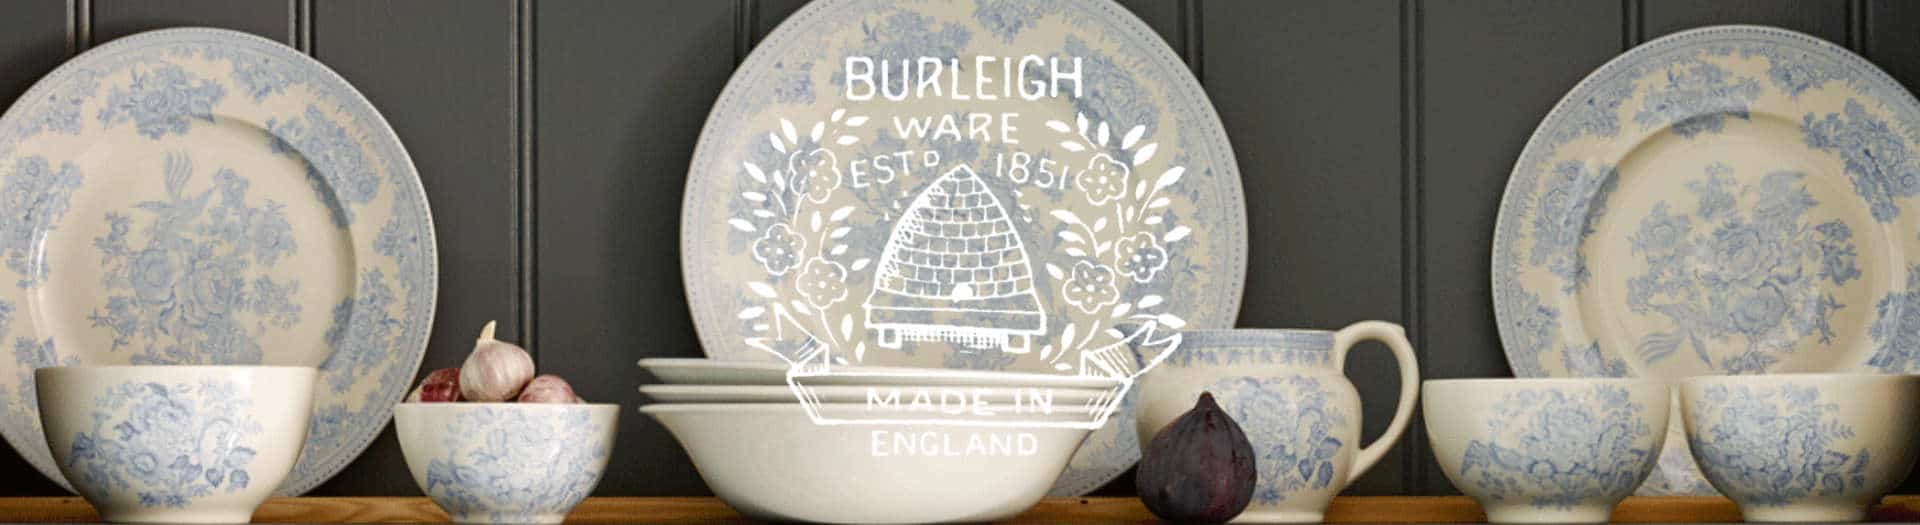 burleigh pottery header with logo